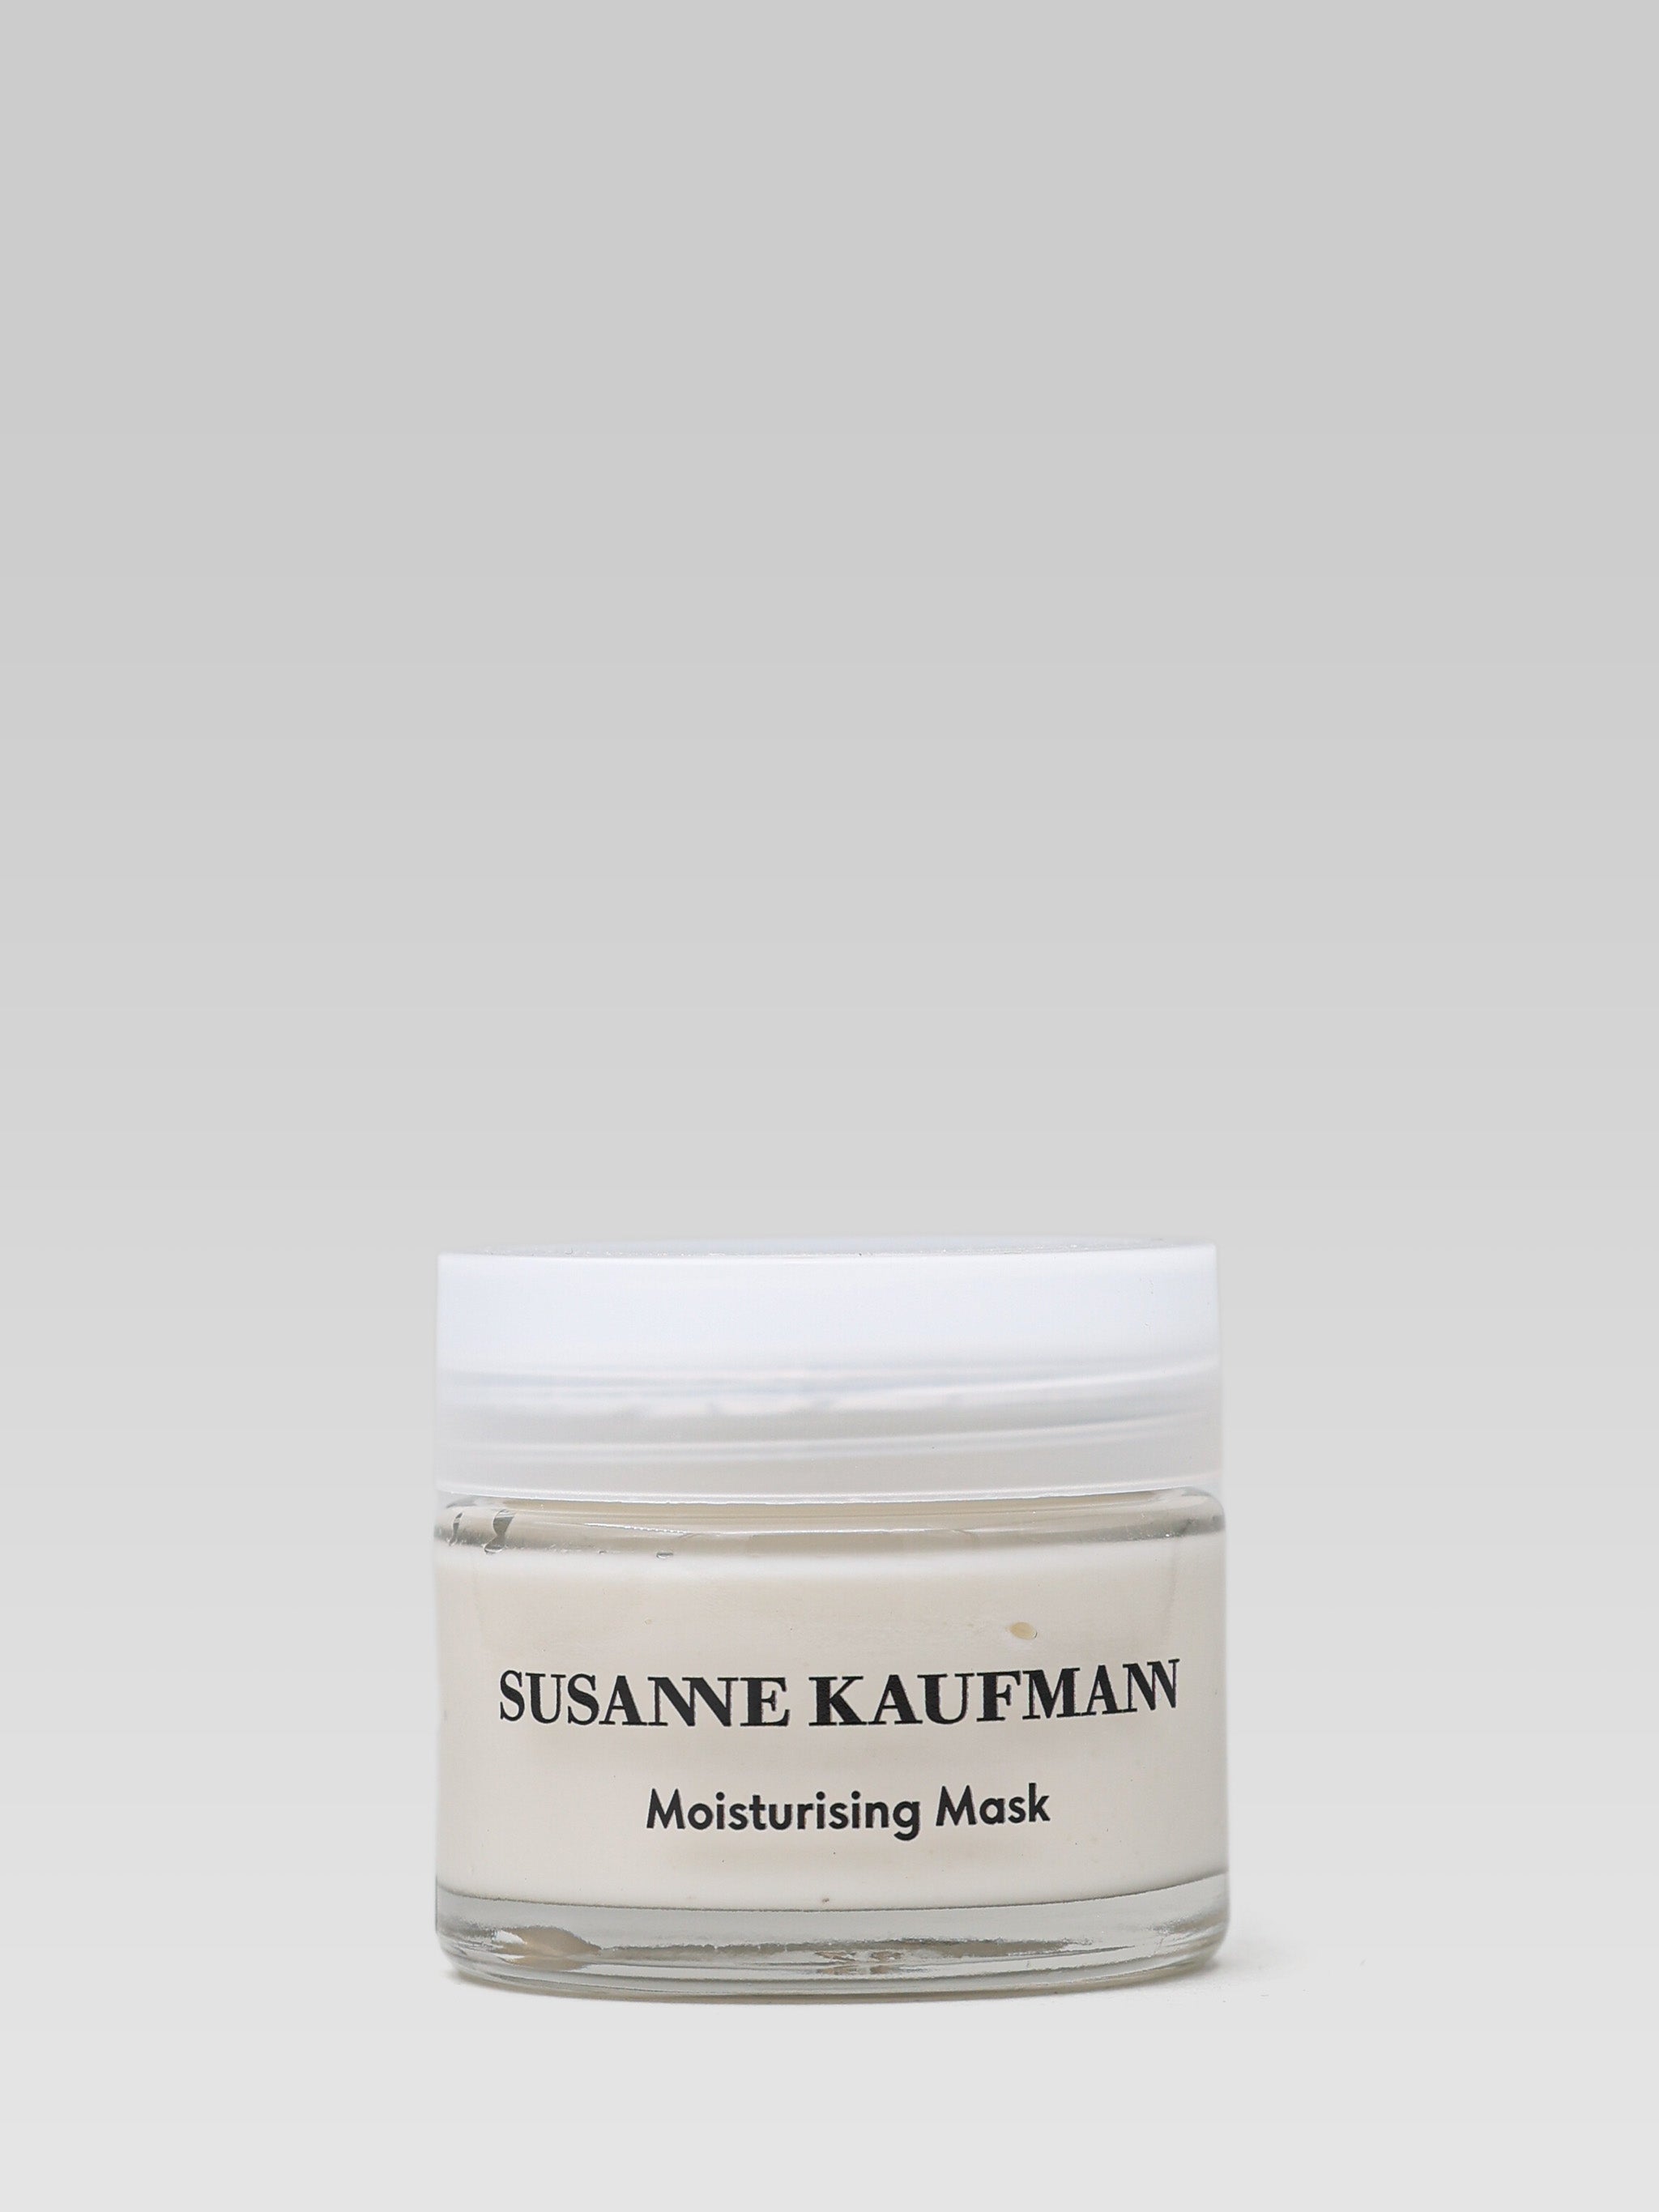 Susanne Kaufmann Moisturising Mask product shot 